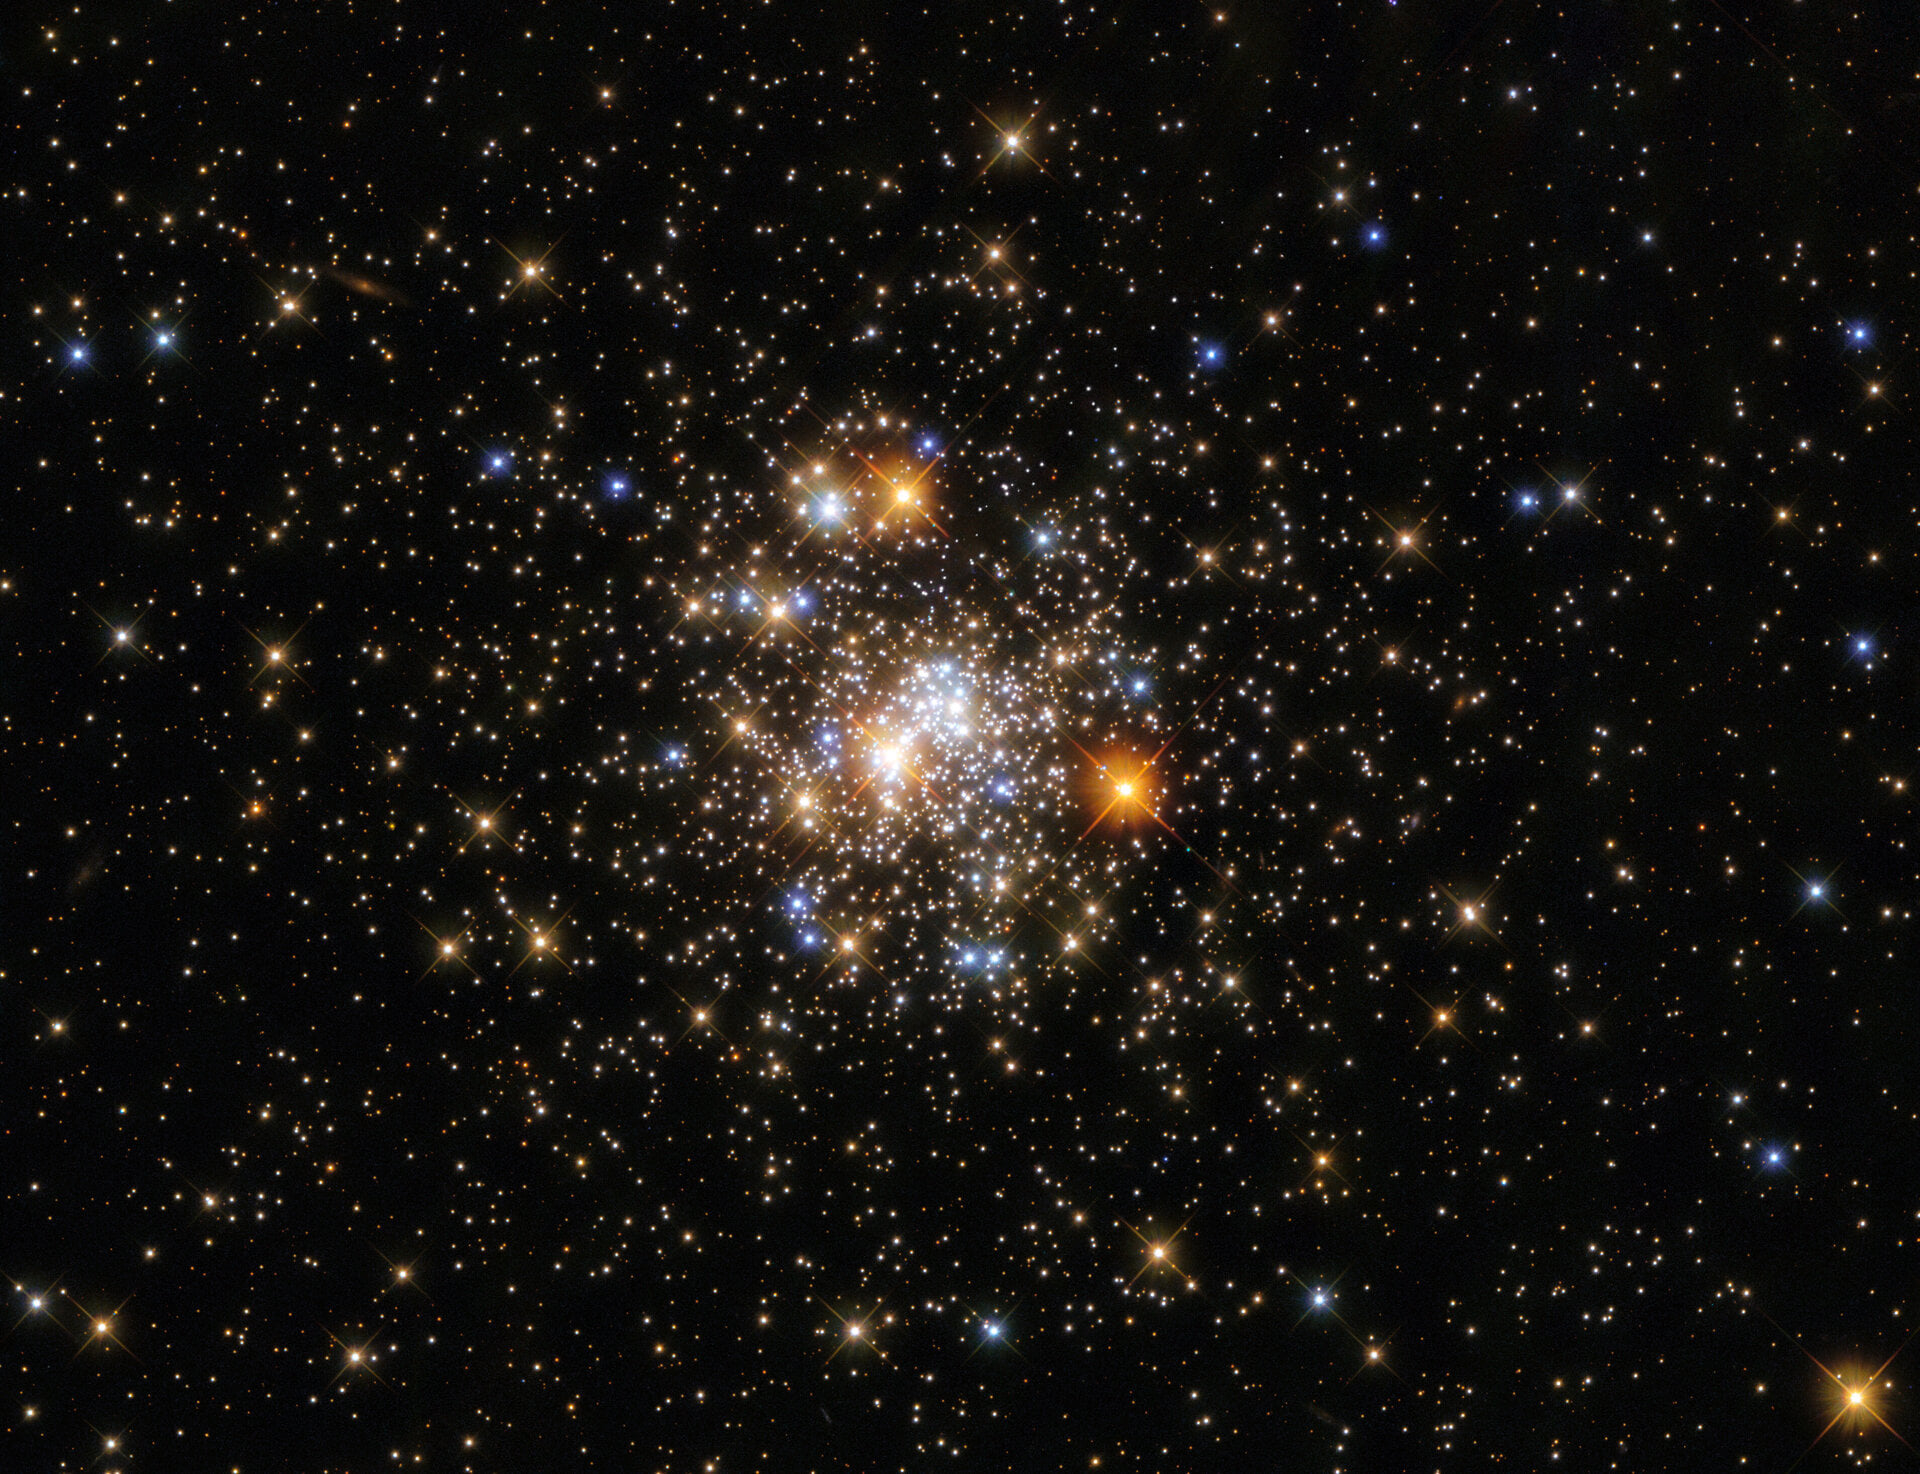 Image Credit: ESA/Hubble and NASA, A. Sarajedini; CC BY 4.0